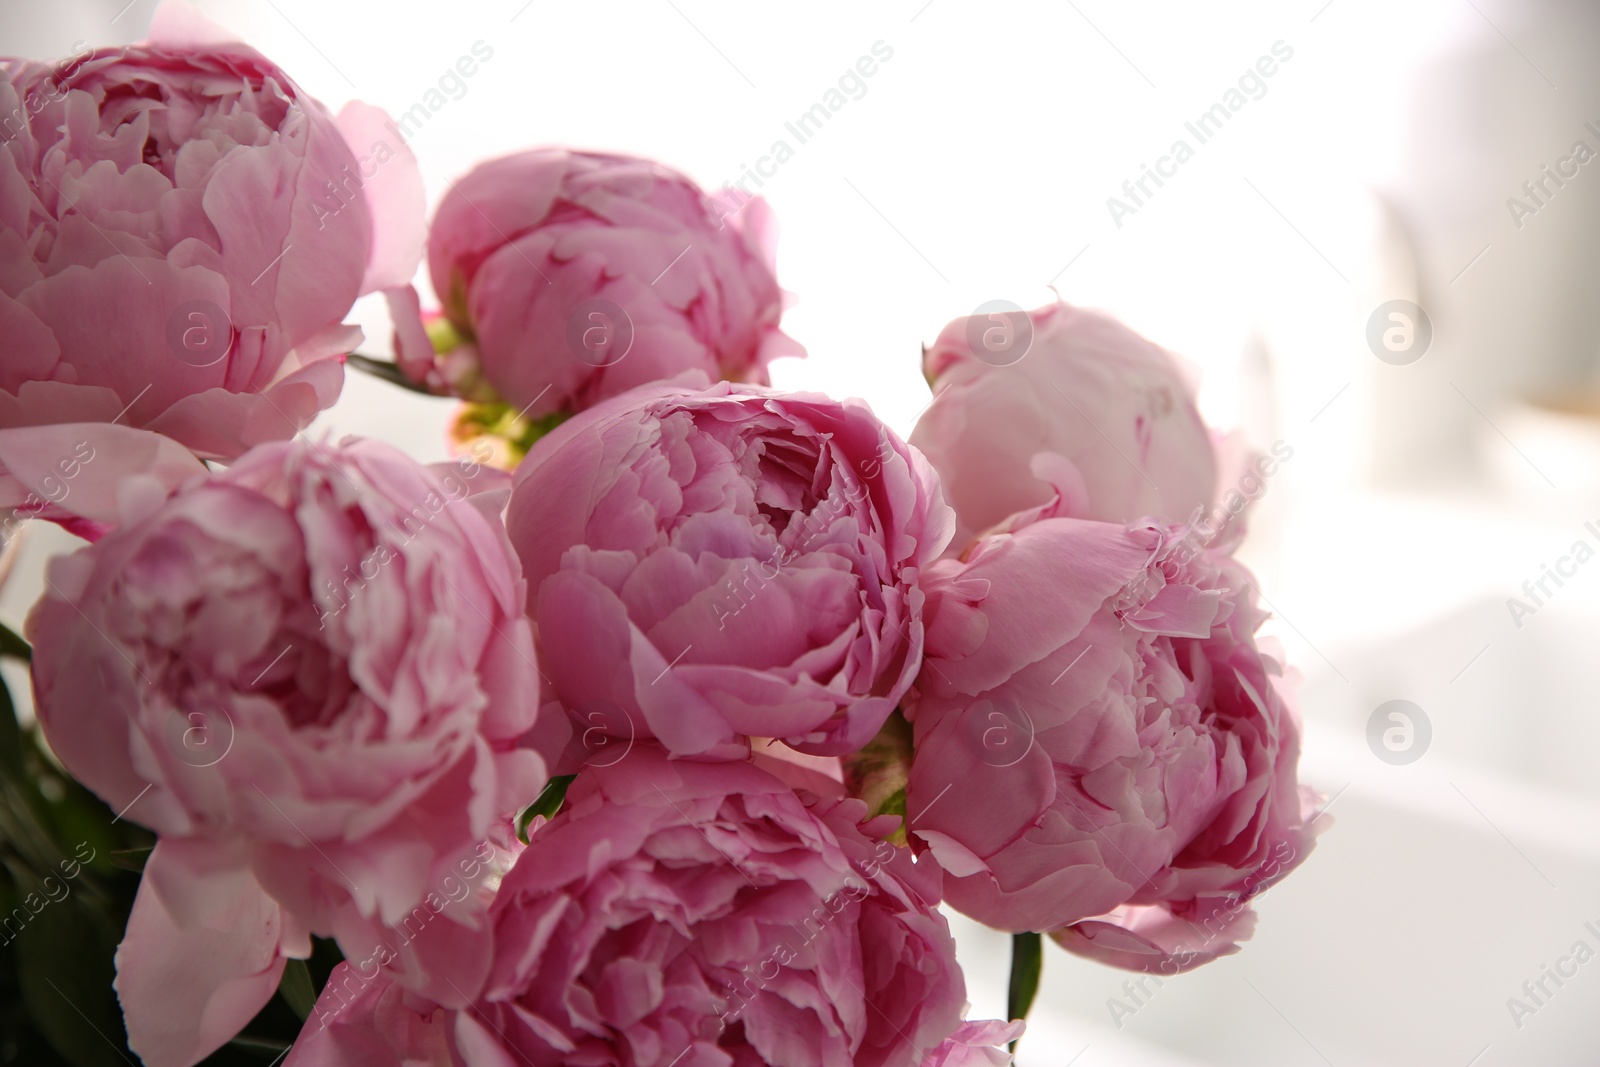 Photo of Bouquet of beautiful fresh pink peonies indoors, closeup